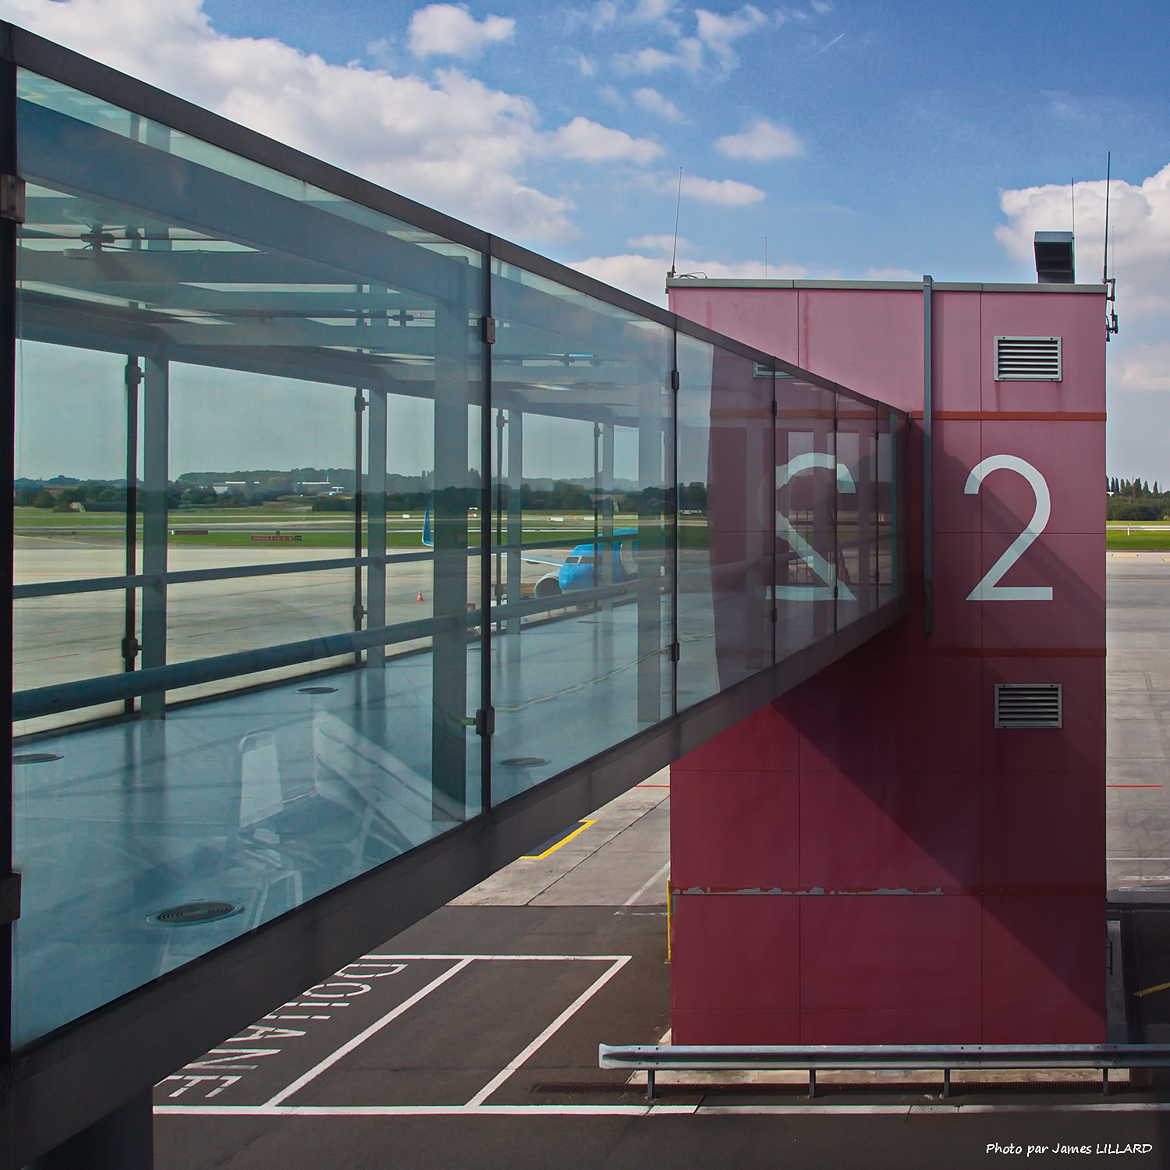 Terminal 2